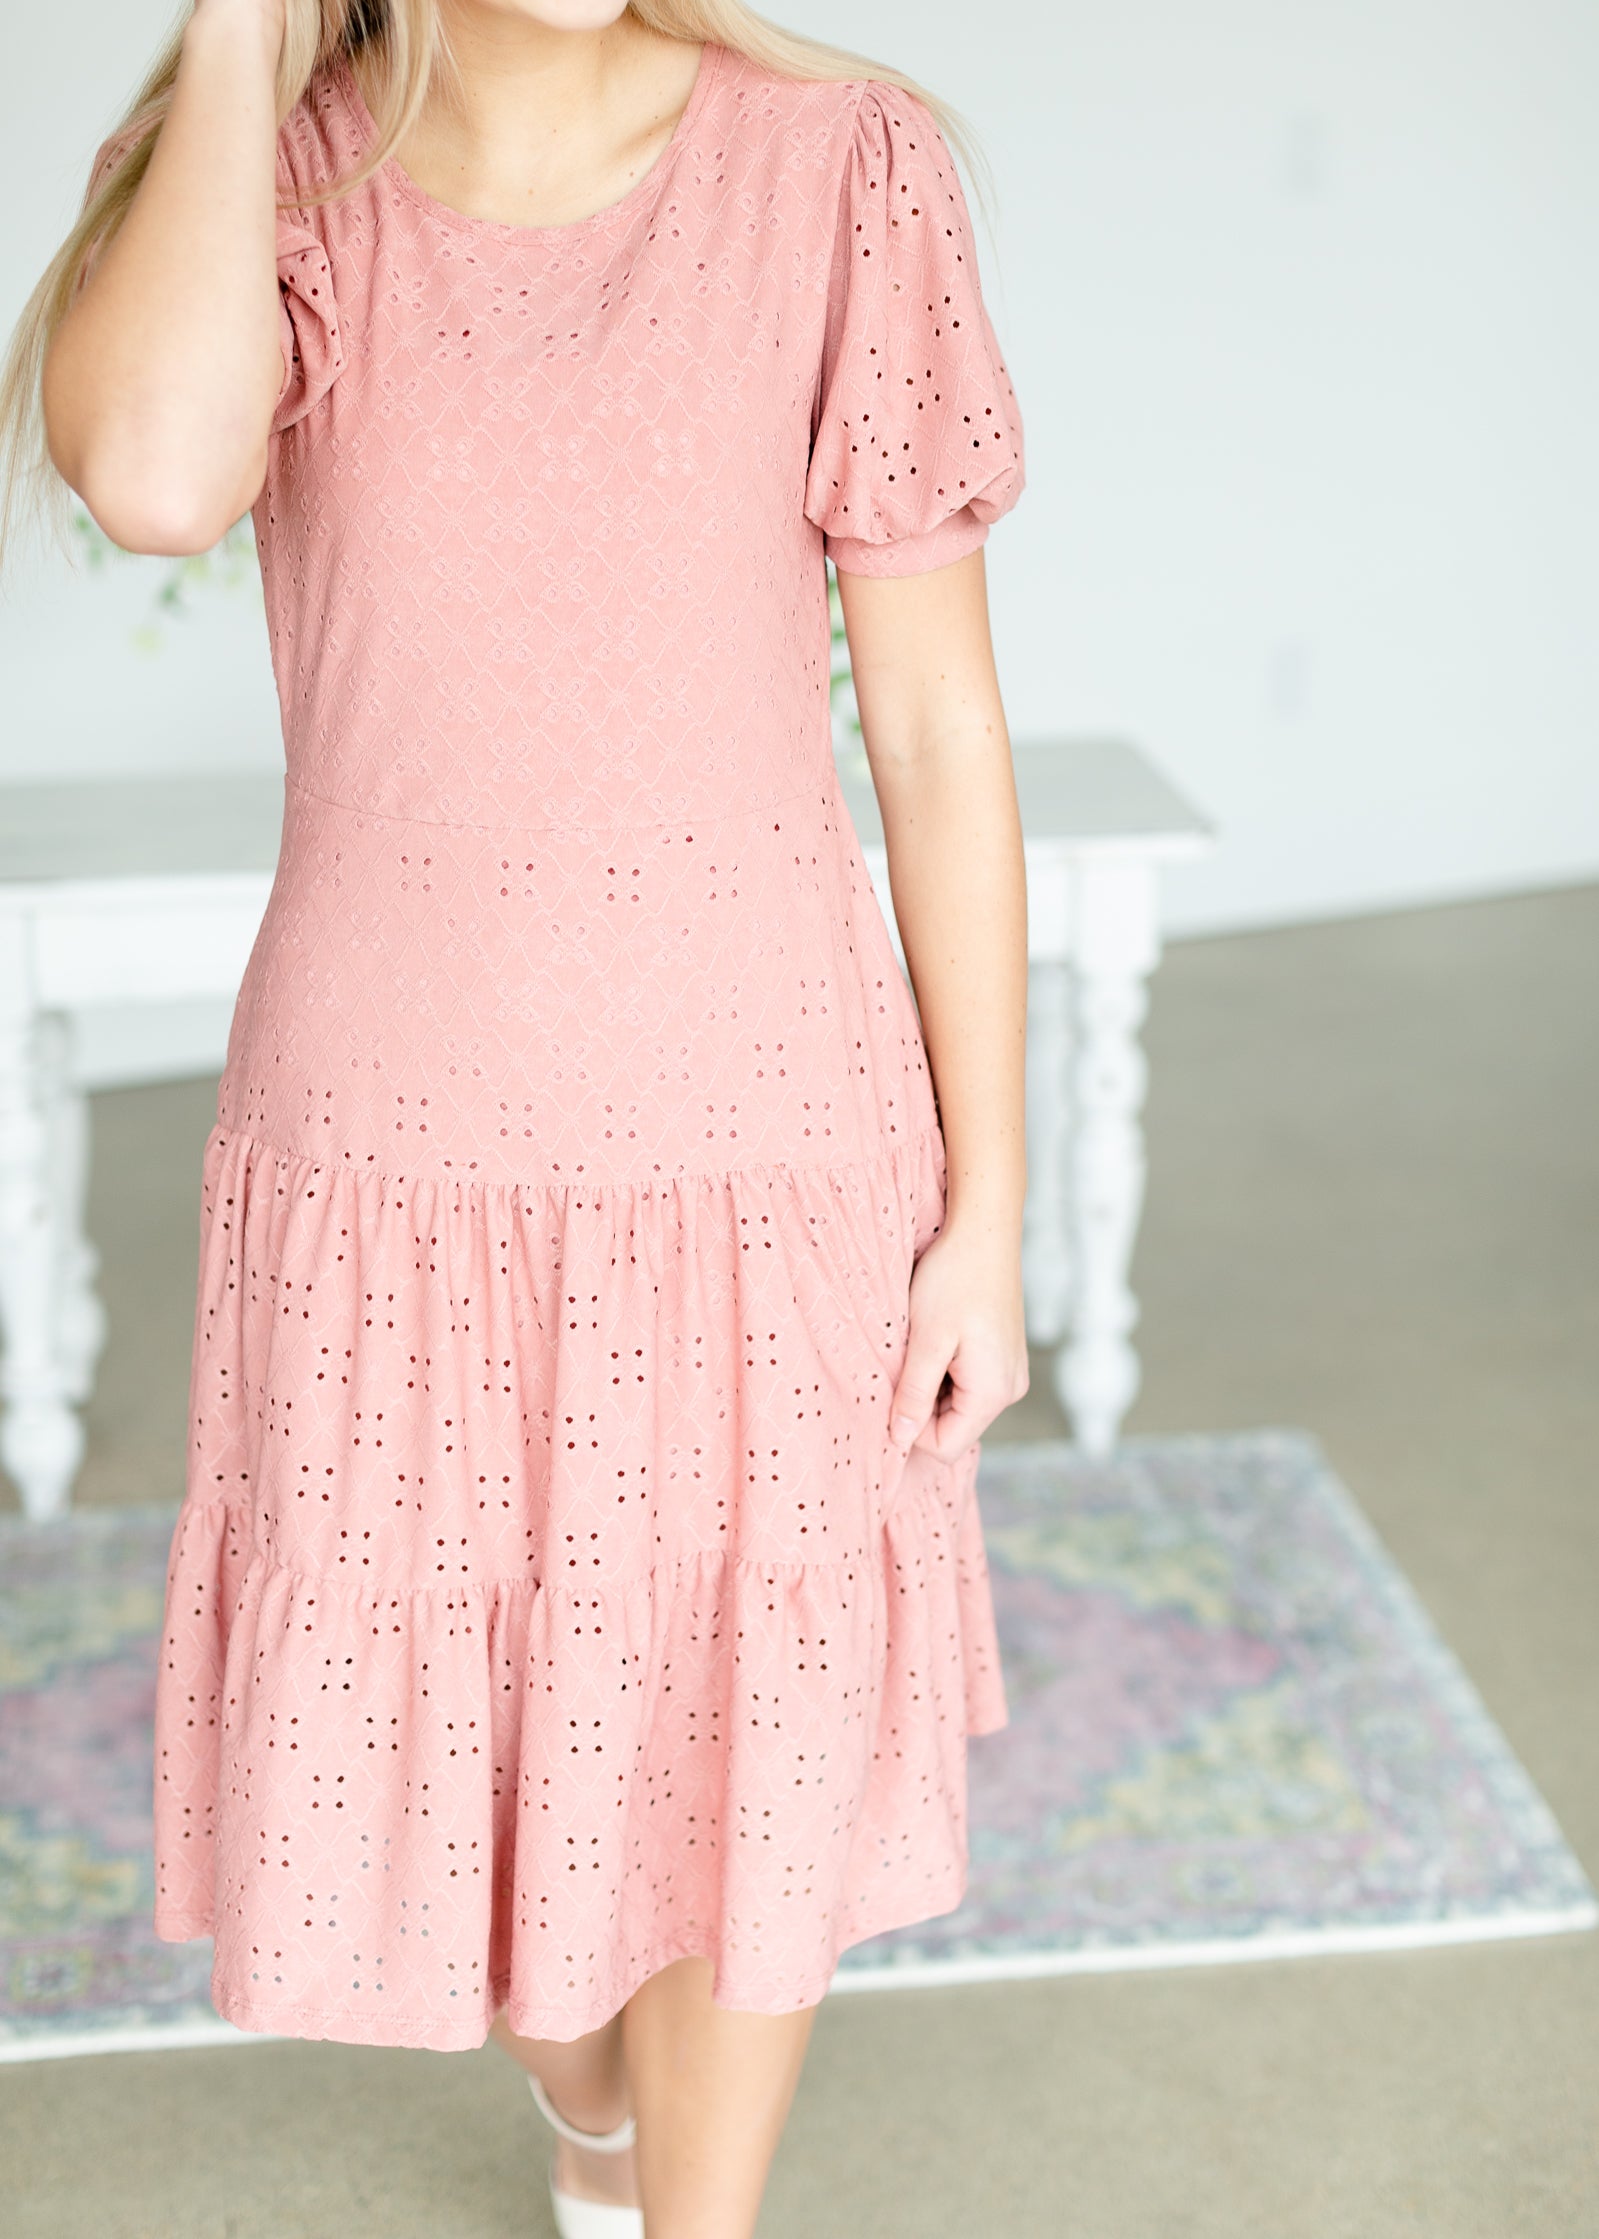 Rose Eyelet Overlay Midi Dress - FINAL SALE Dresses